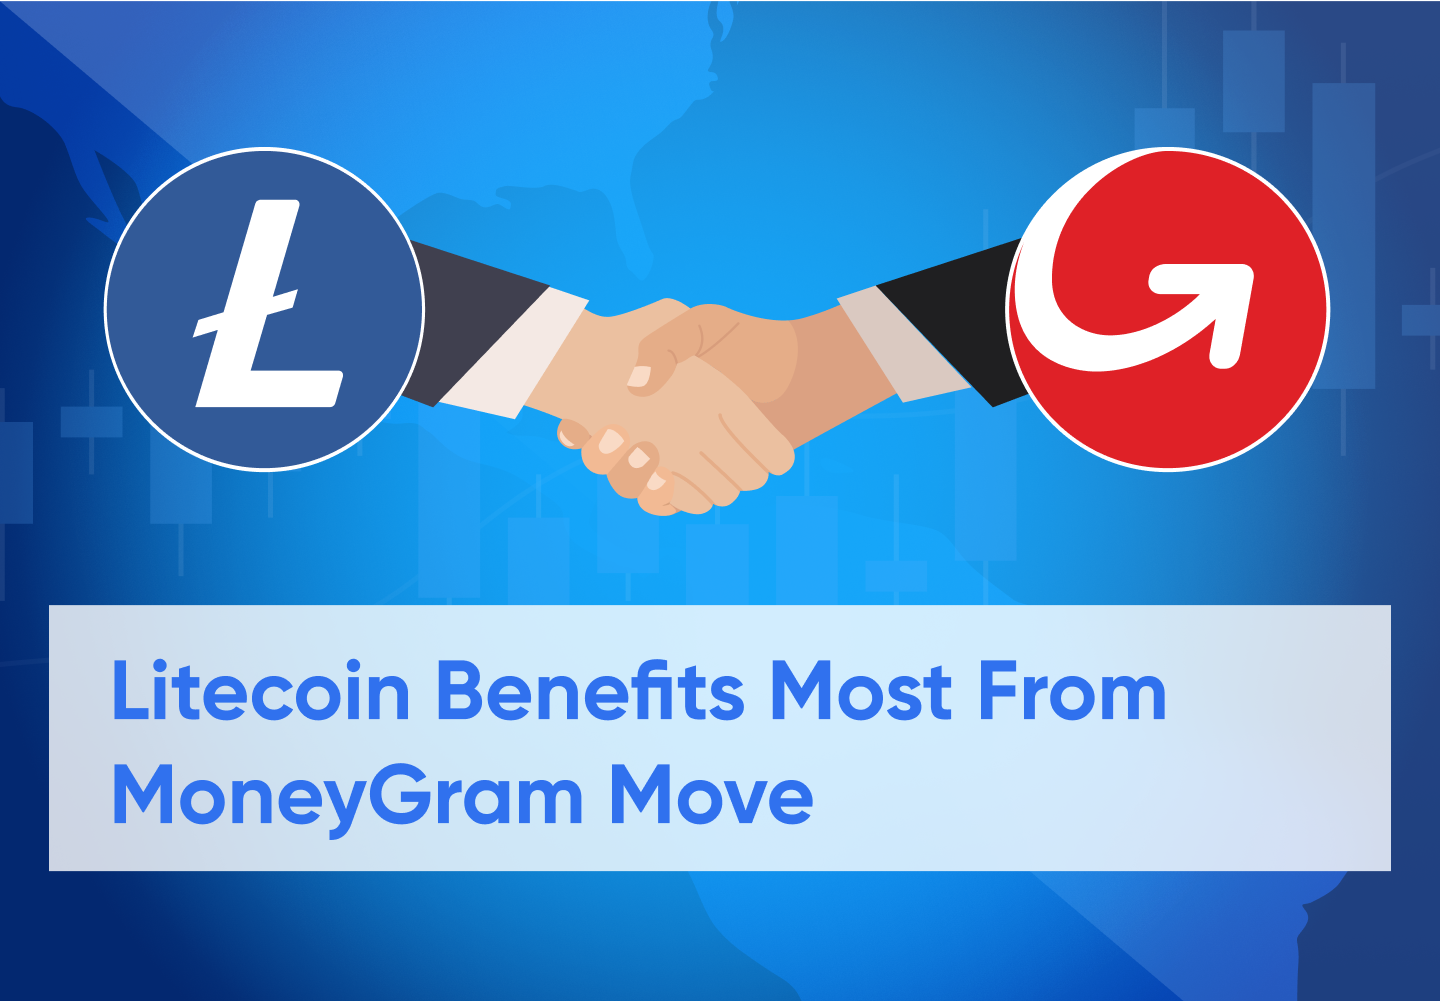 MoneyGram Support Could Turn The Tide for Litecoin